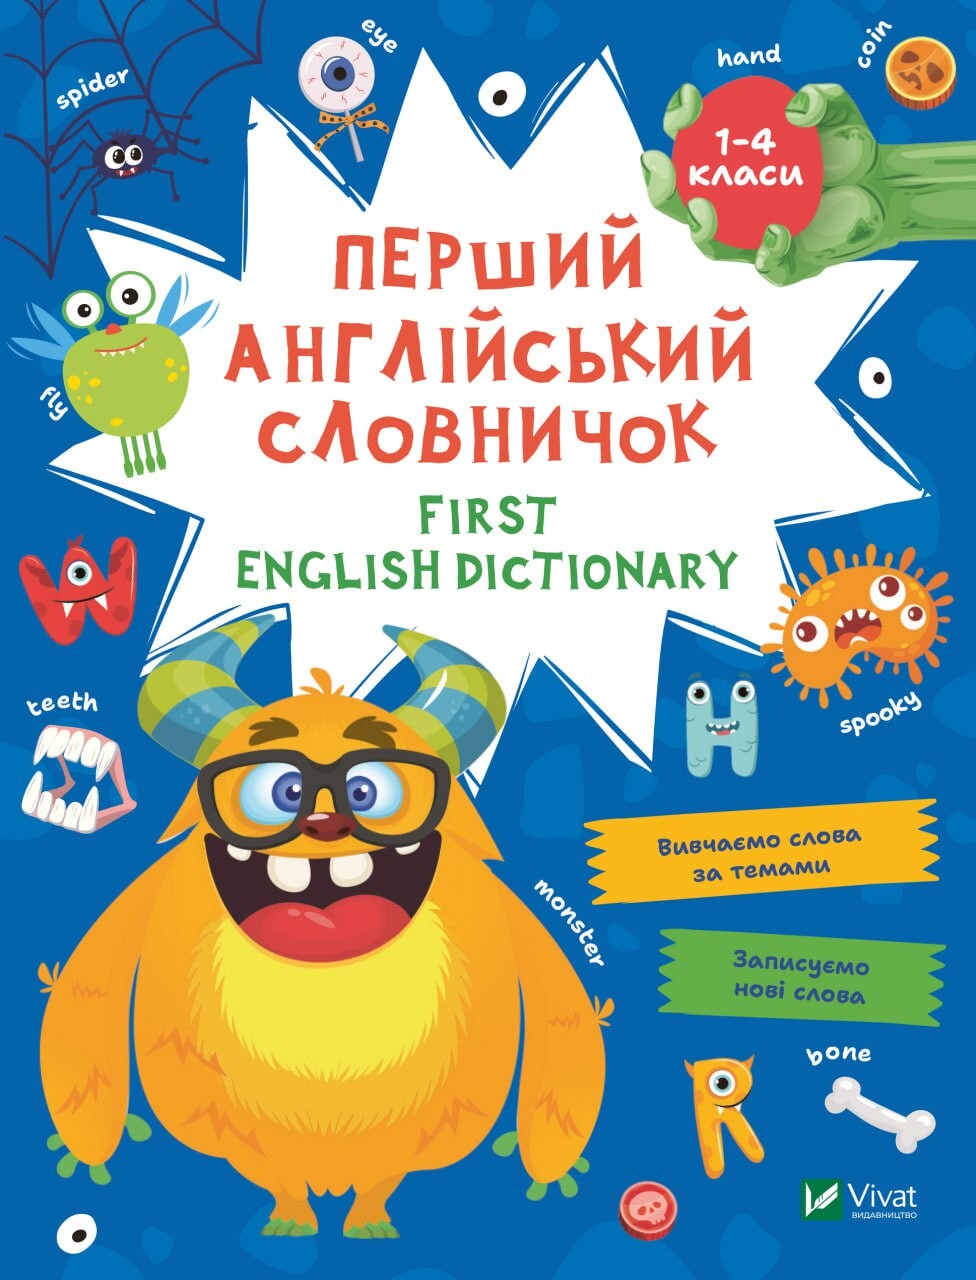 First English dictionary. Перший англійський словничок. Монстр. 1-4 класи - Vivat